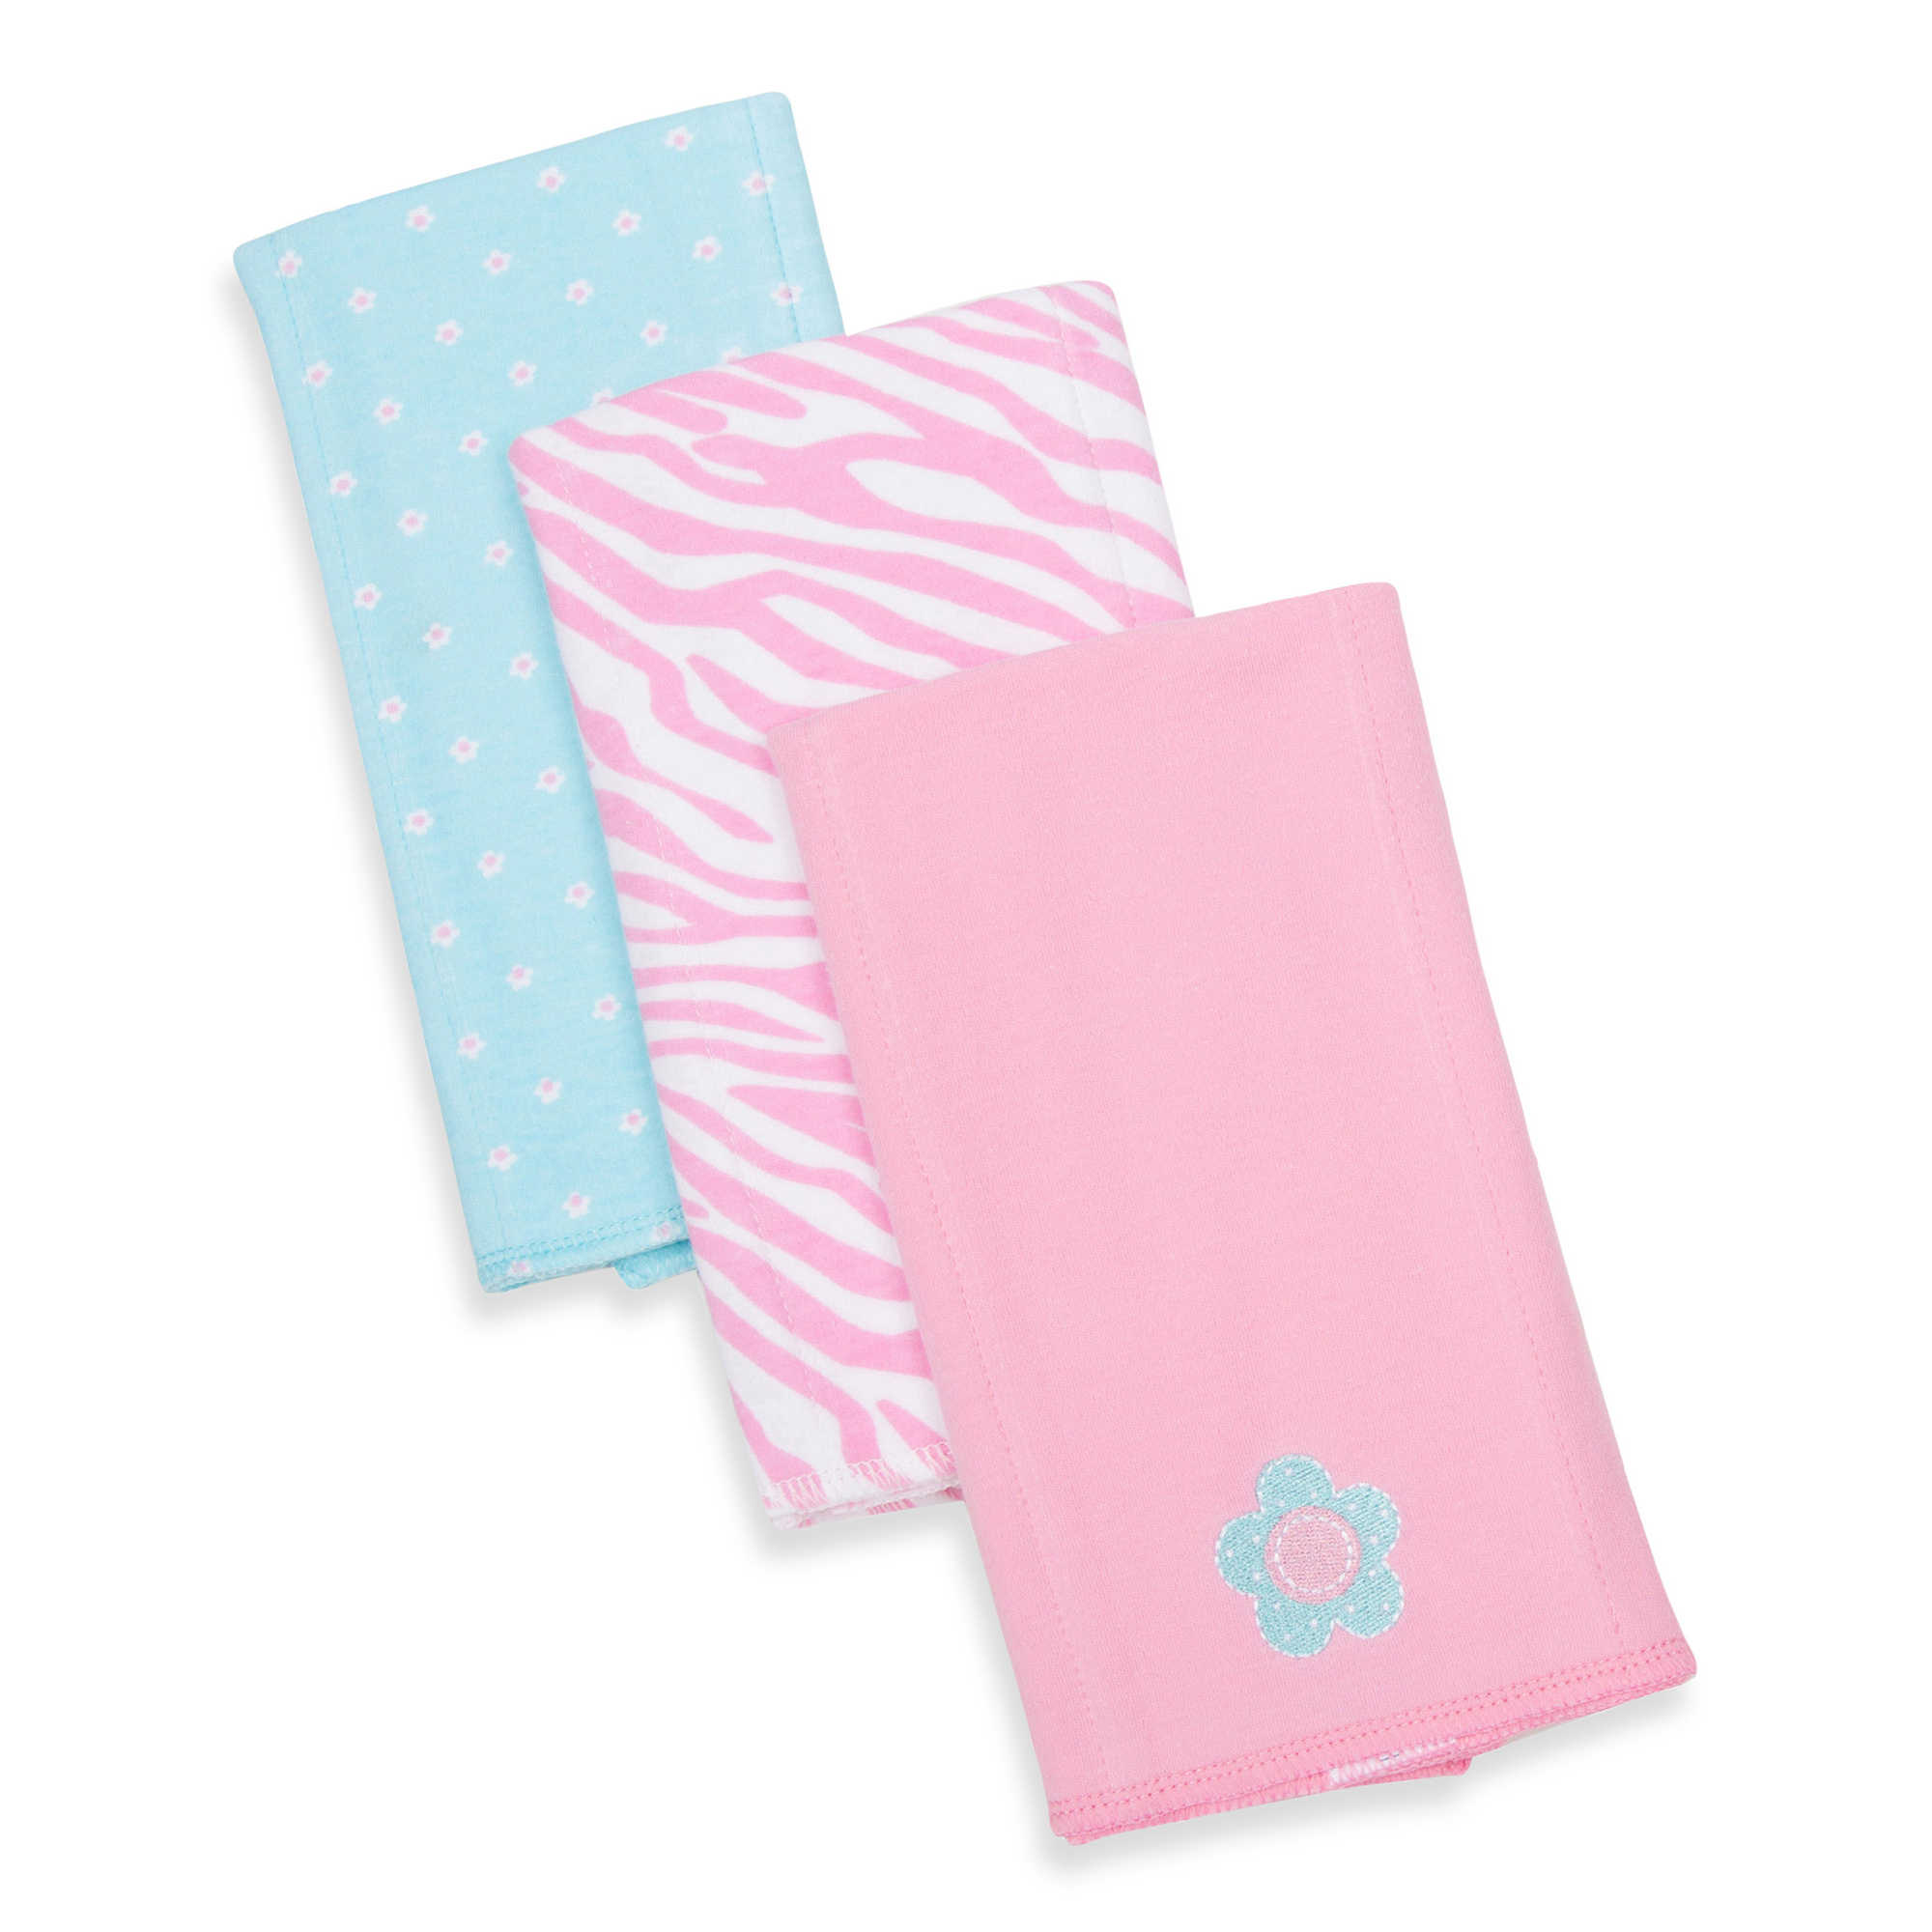 Gerber® 3-Pack Flower/Zebra Knit Burp Cloths in Pink and Blue